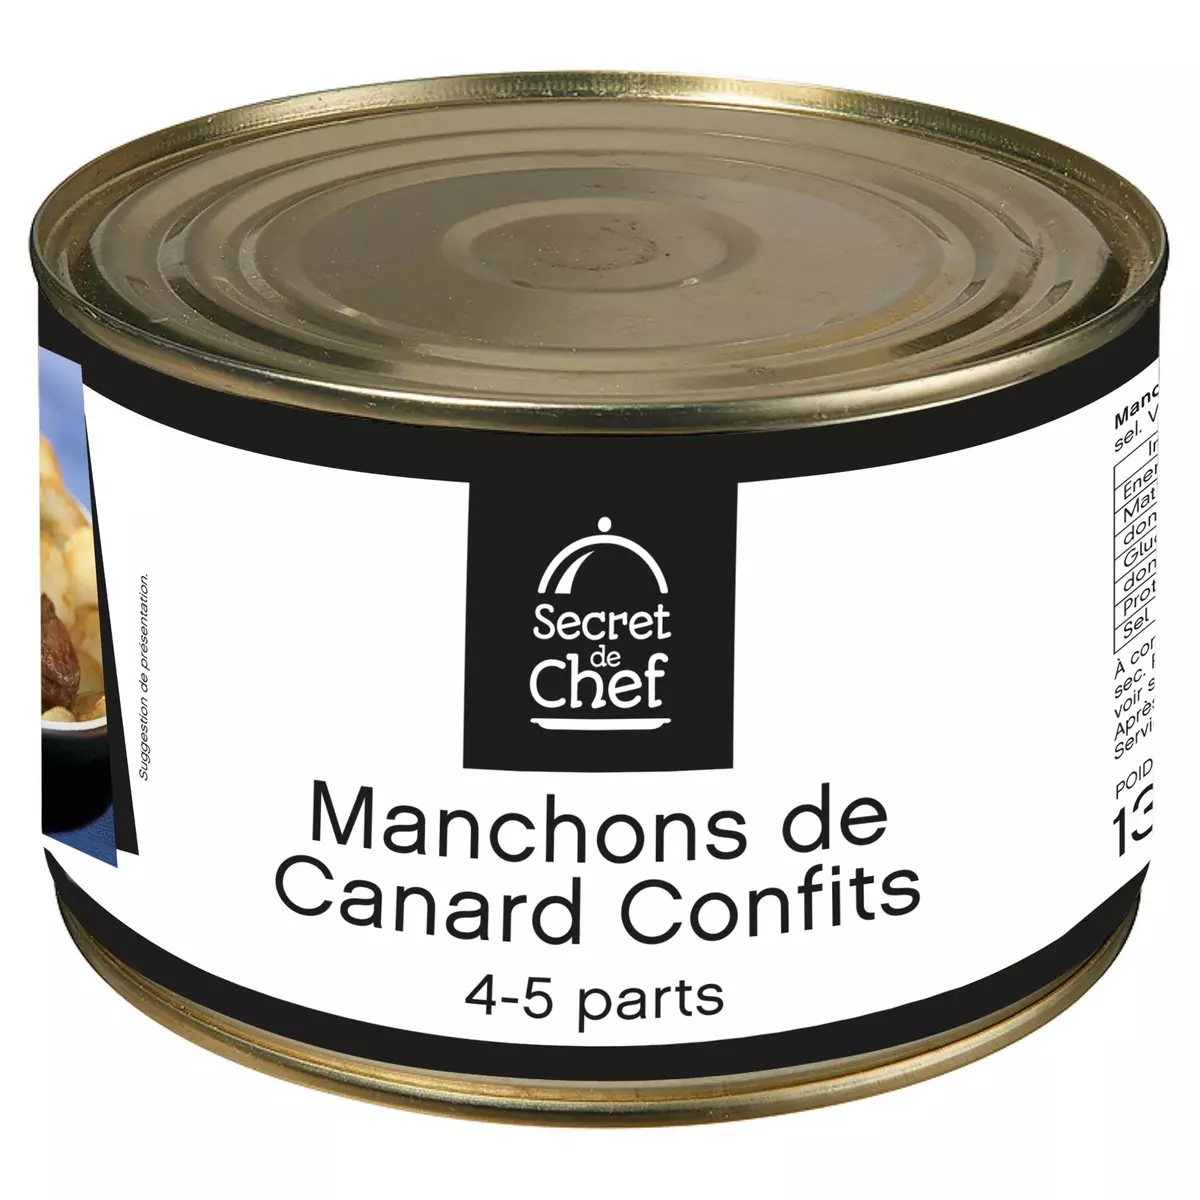 SECRET DE CHEF Manchons de canard confits 4-5 parts 1.35g